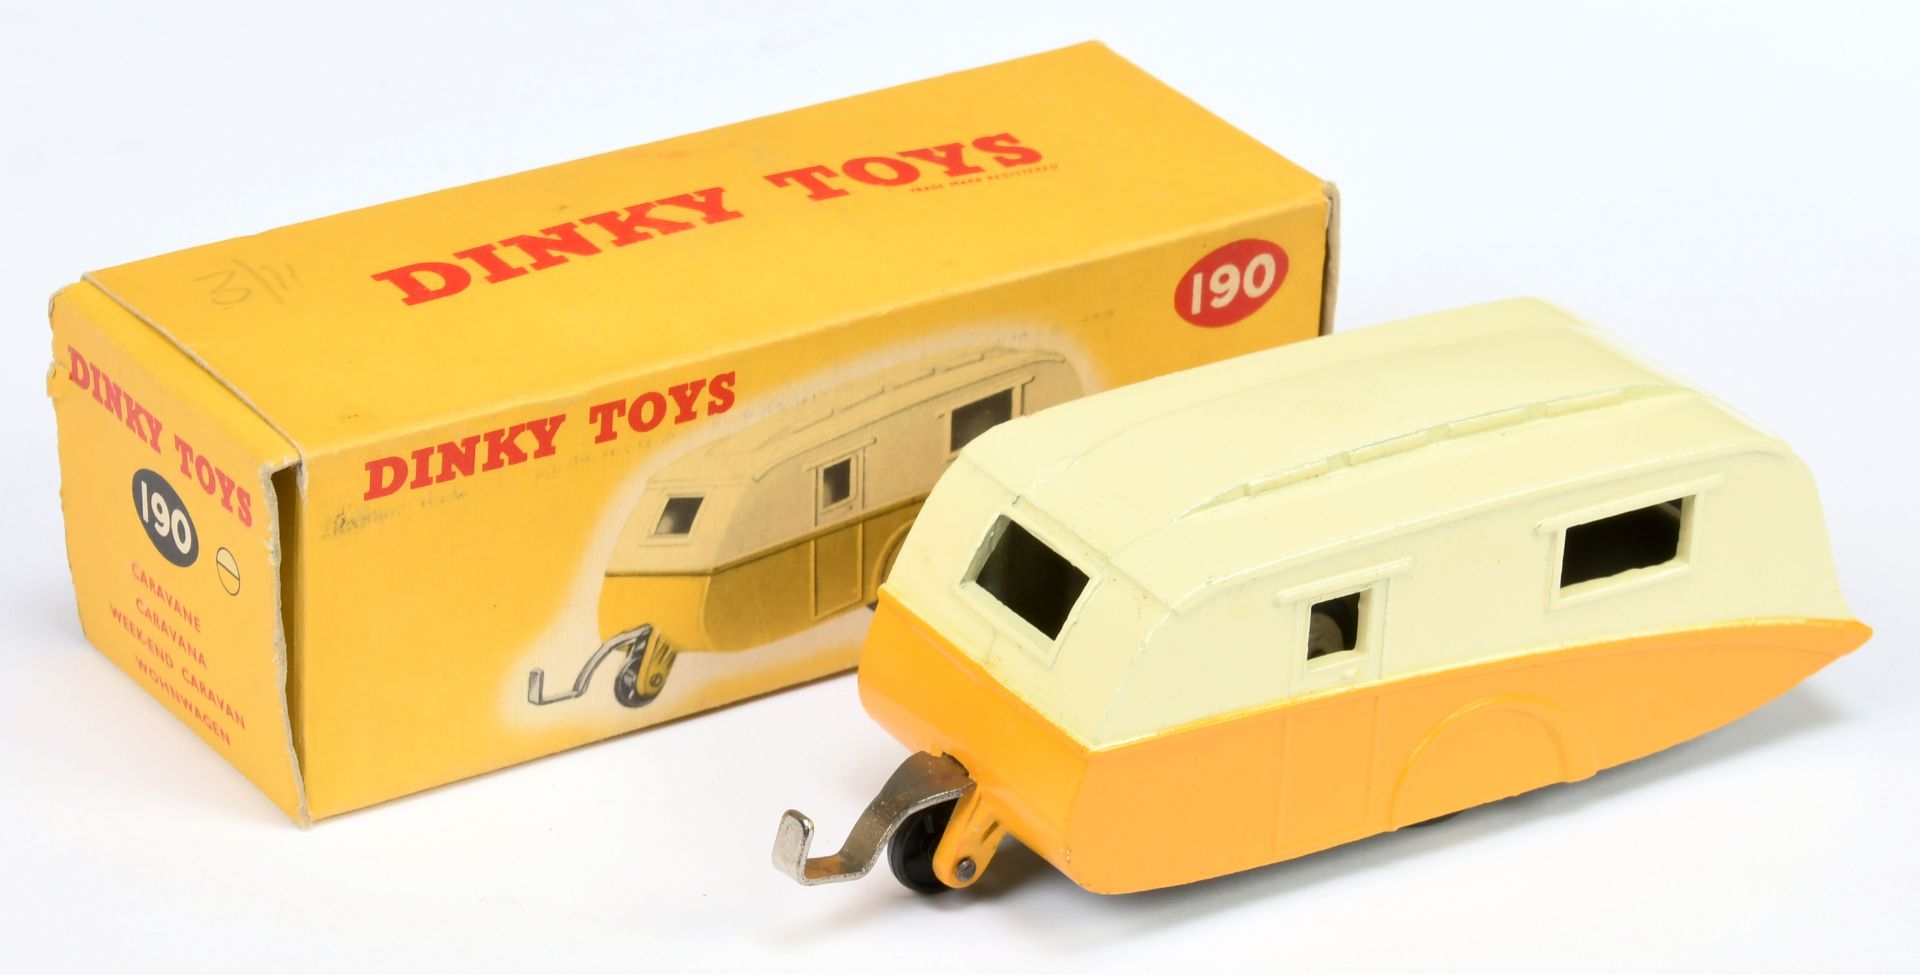 Dinky Toys 190 Caravan - Two-Tone Cream over yellow light beige, smooth black metal jockey wheel,...